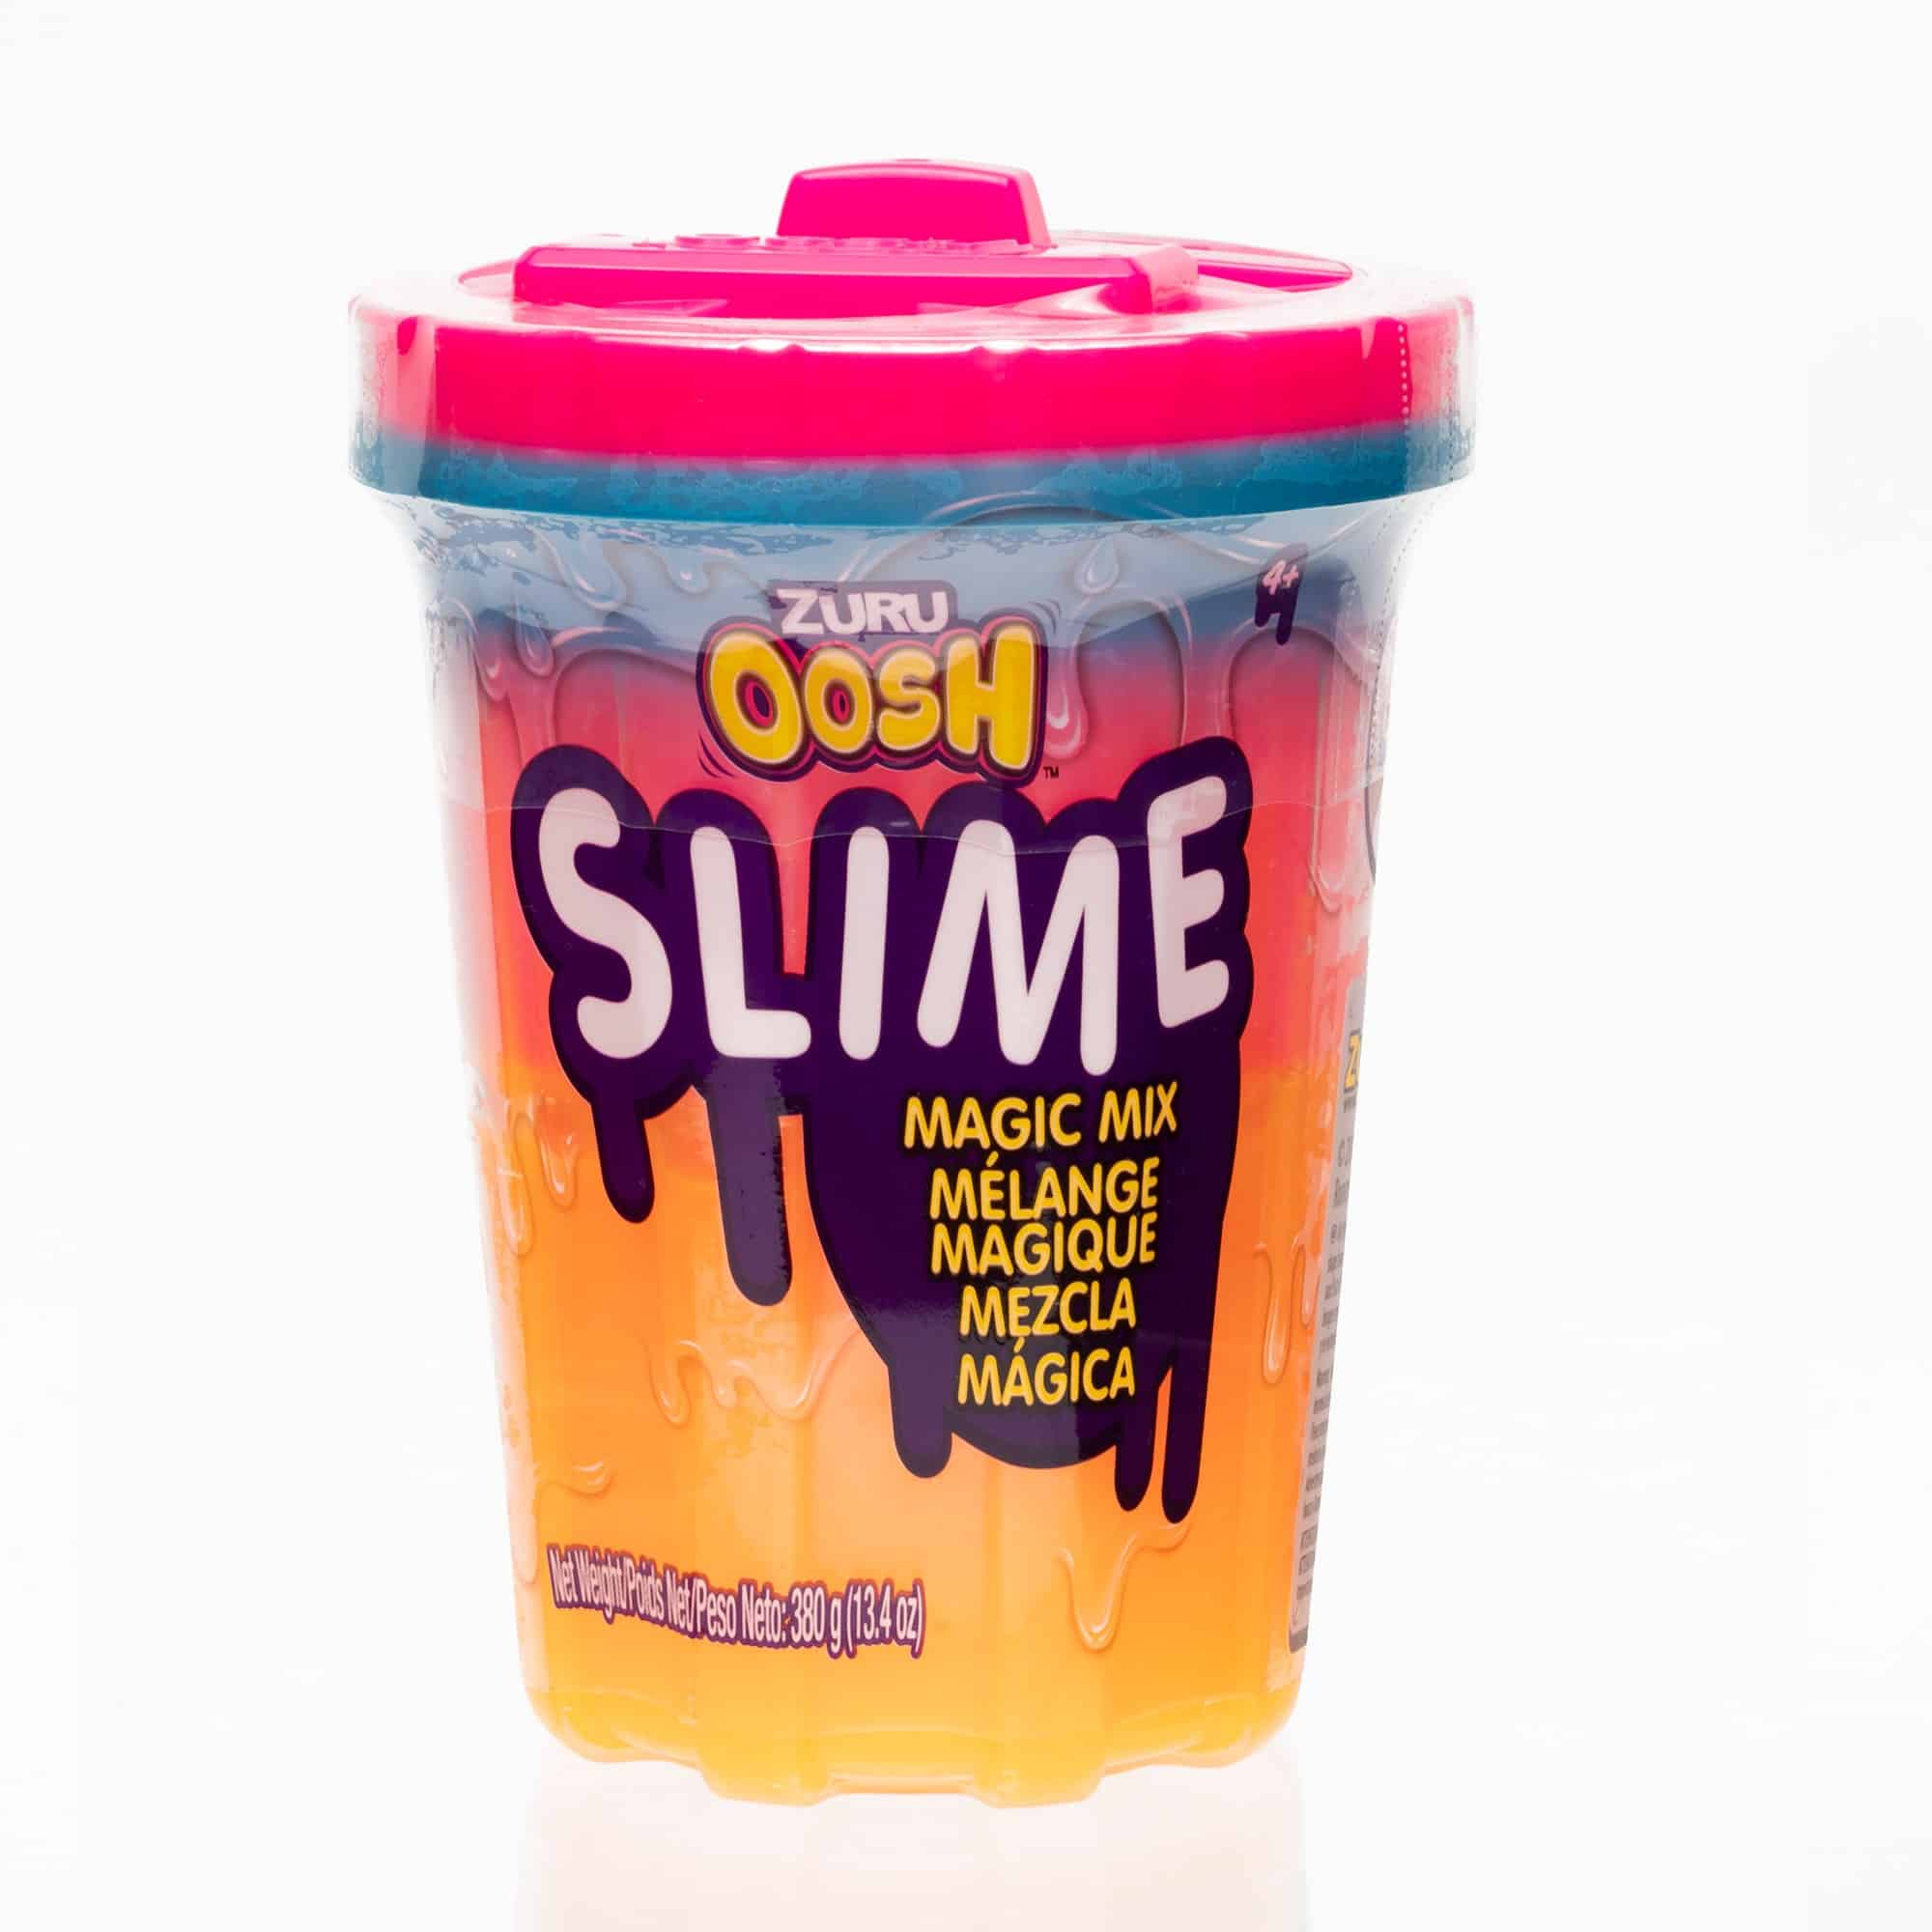 Zuru Oosh Slime - Magic Mix